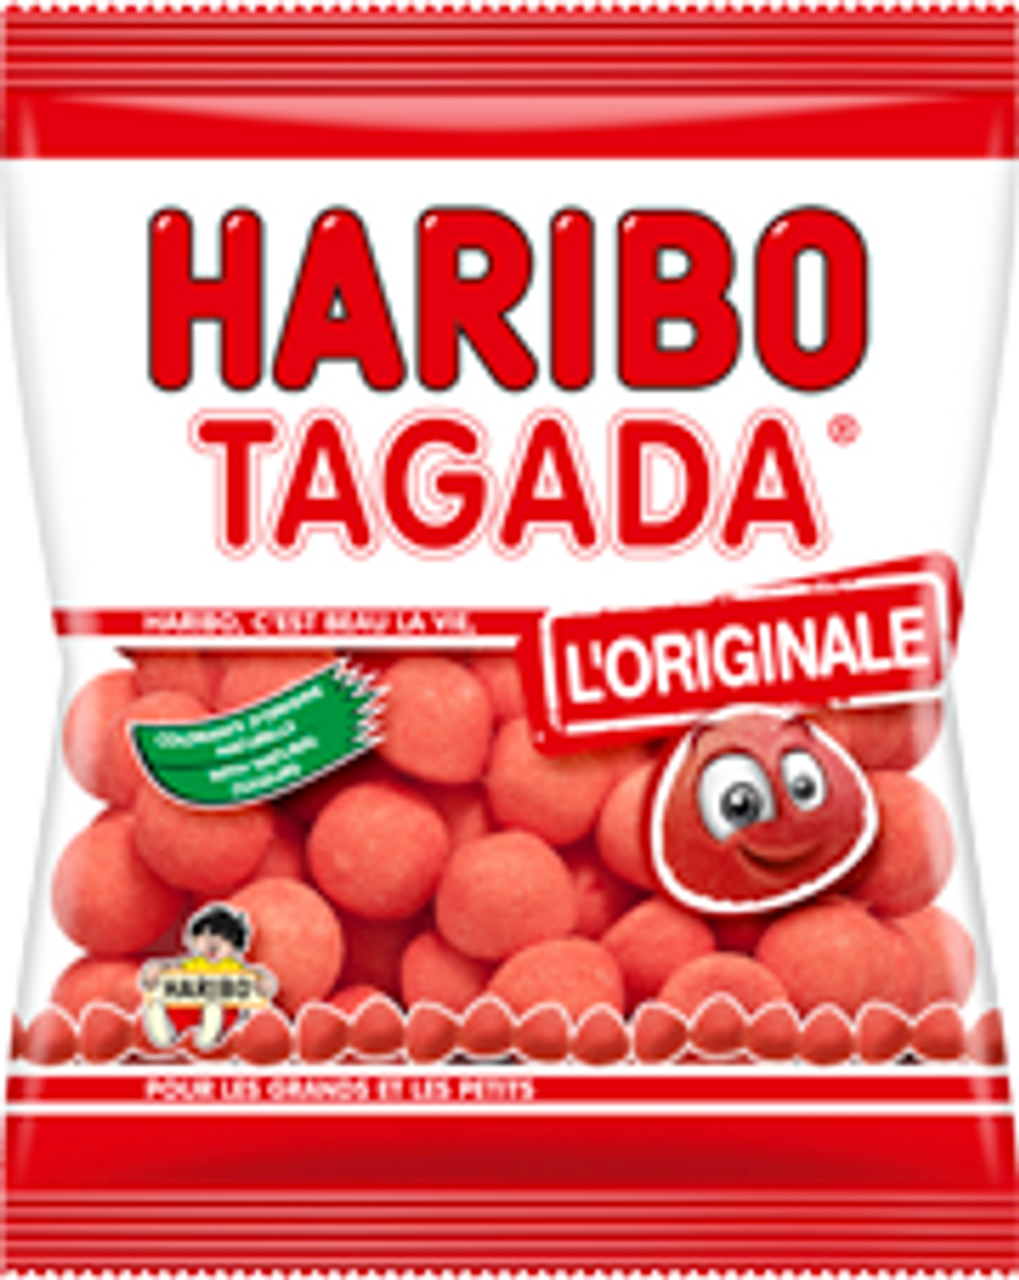 French Strawberry Tagada Candy from Haribo - 4.2 oz